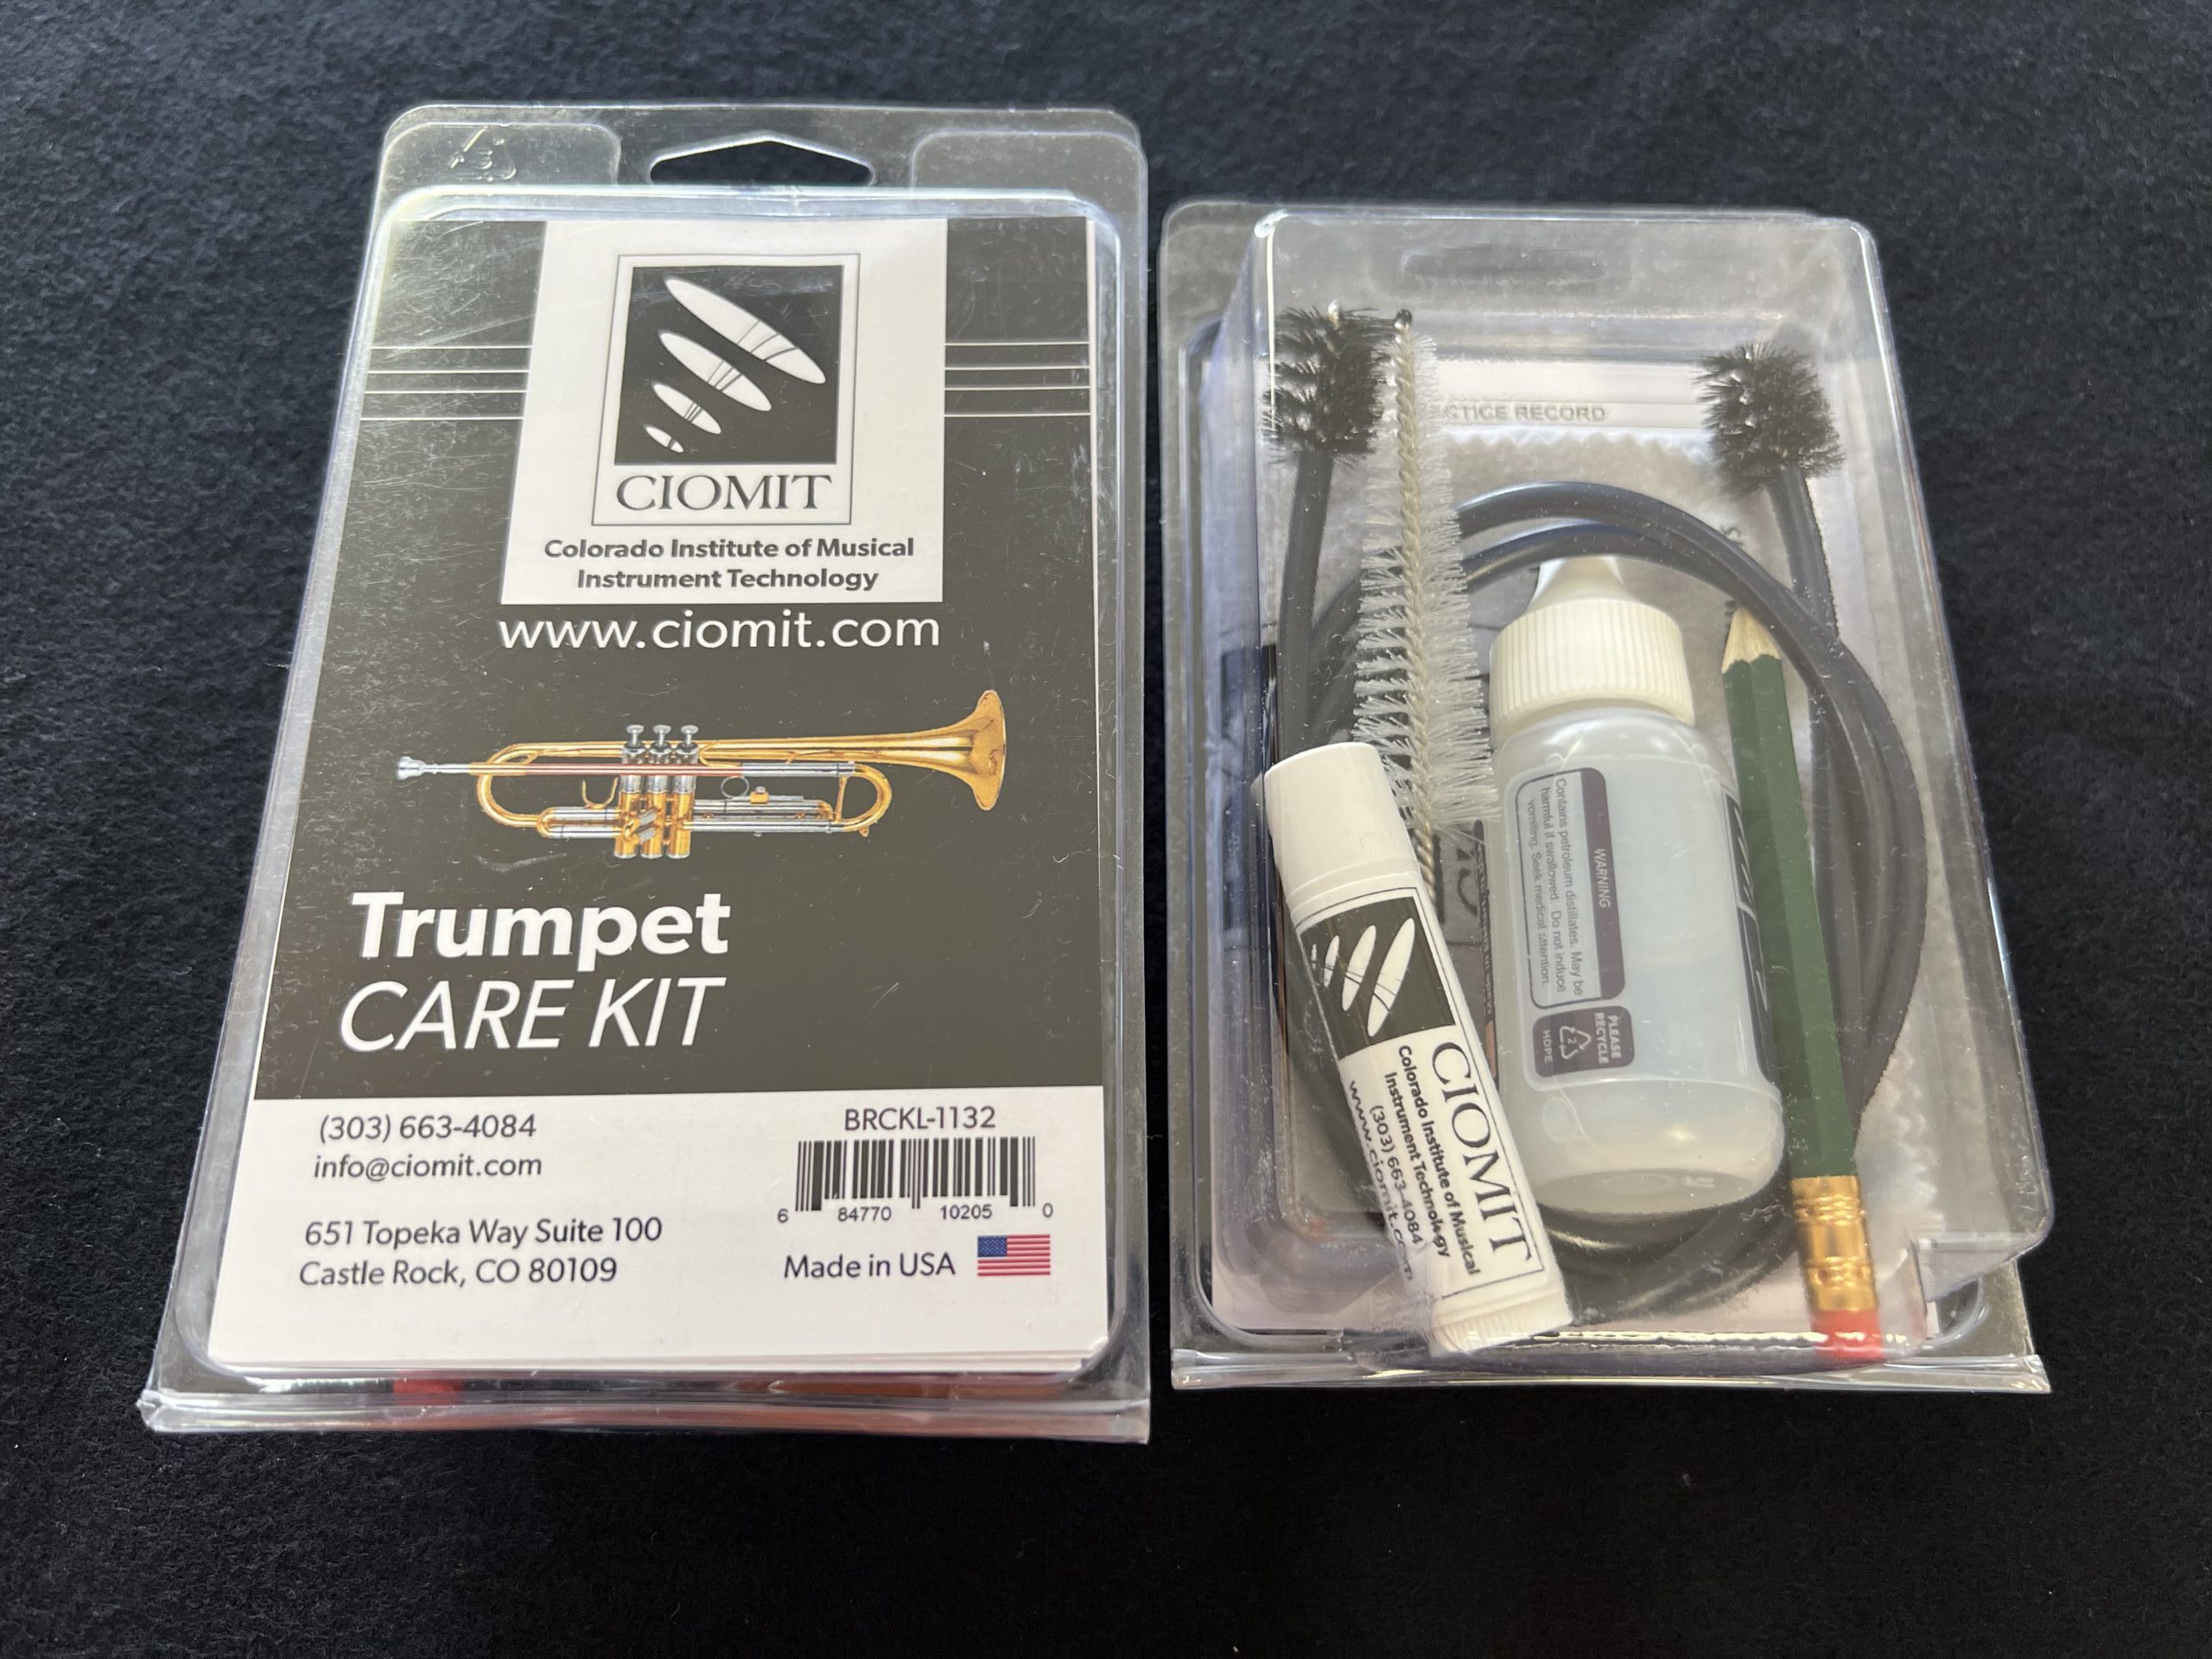 Instrument Care Kits